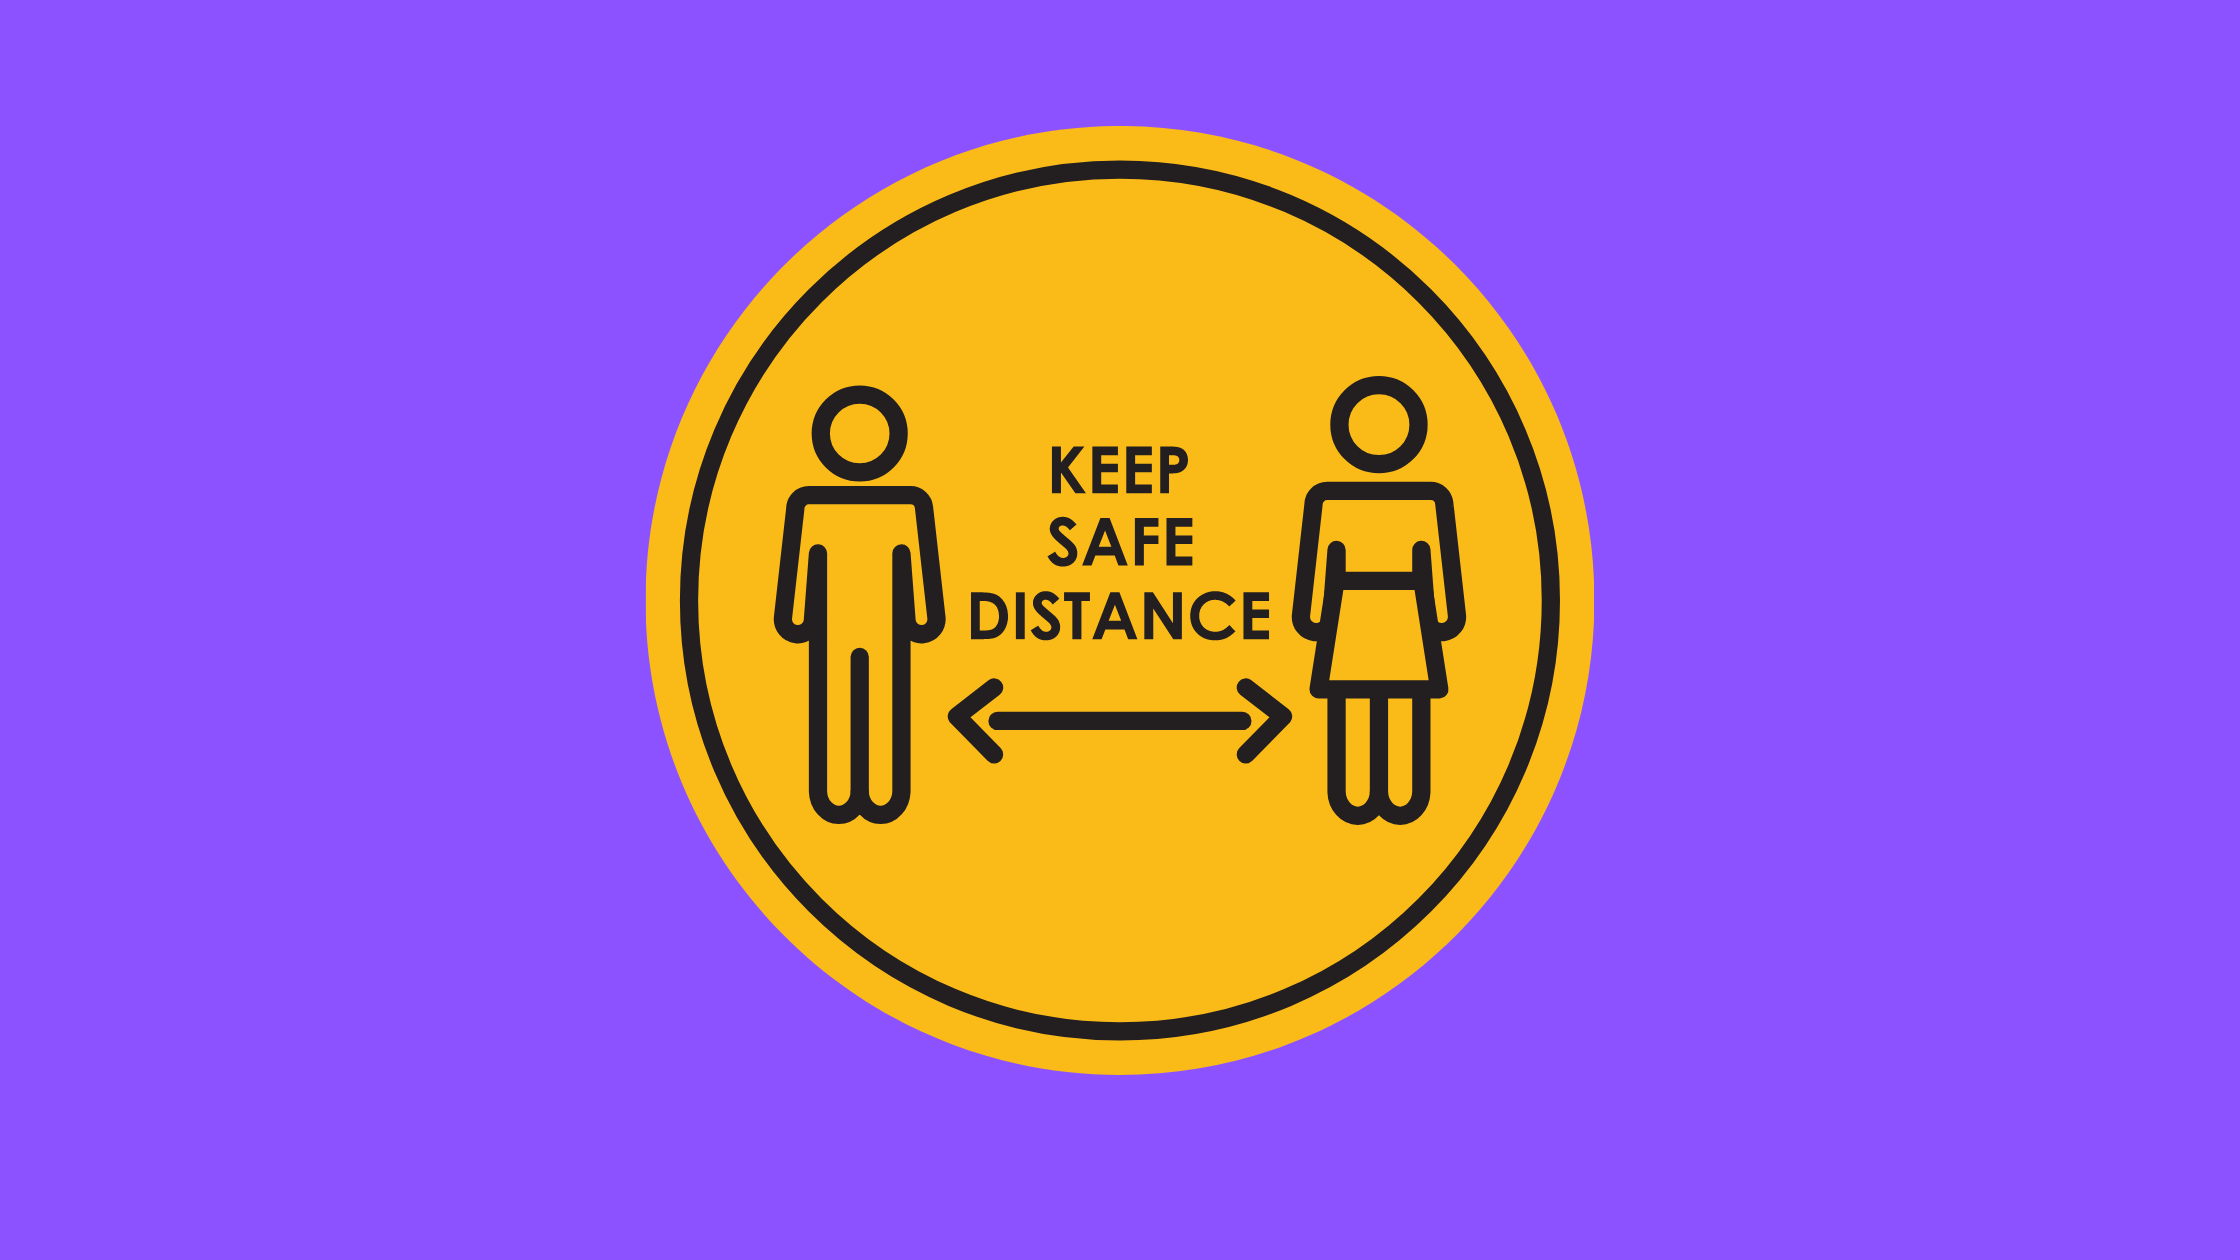 Keep safe distance sign